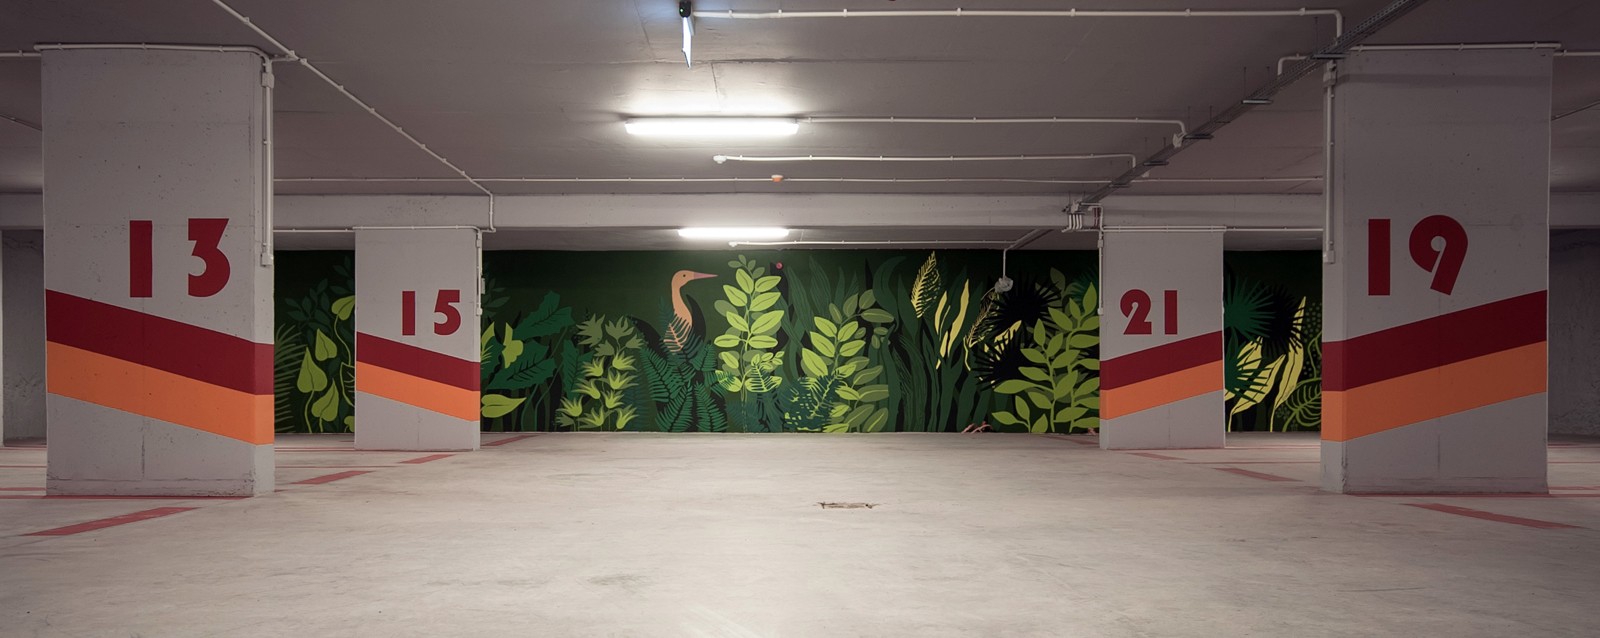 Dynasy Apartment in Warsaw underground parking artistic mural | Apartment | Portfolio